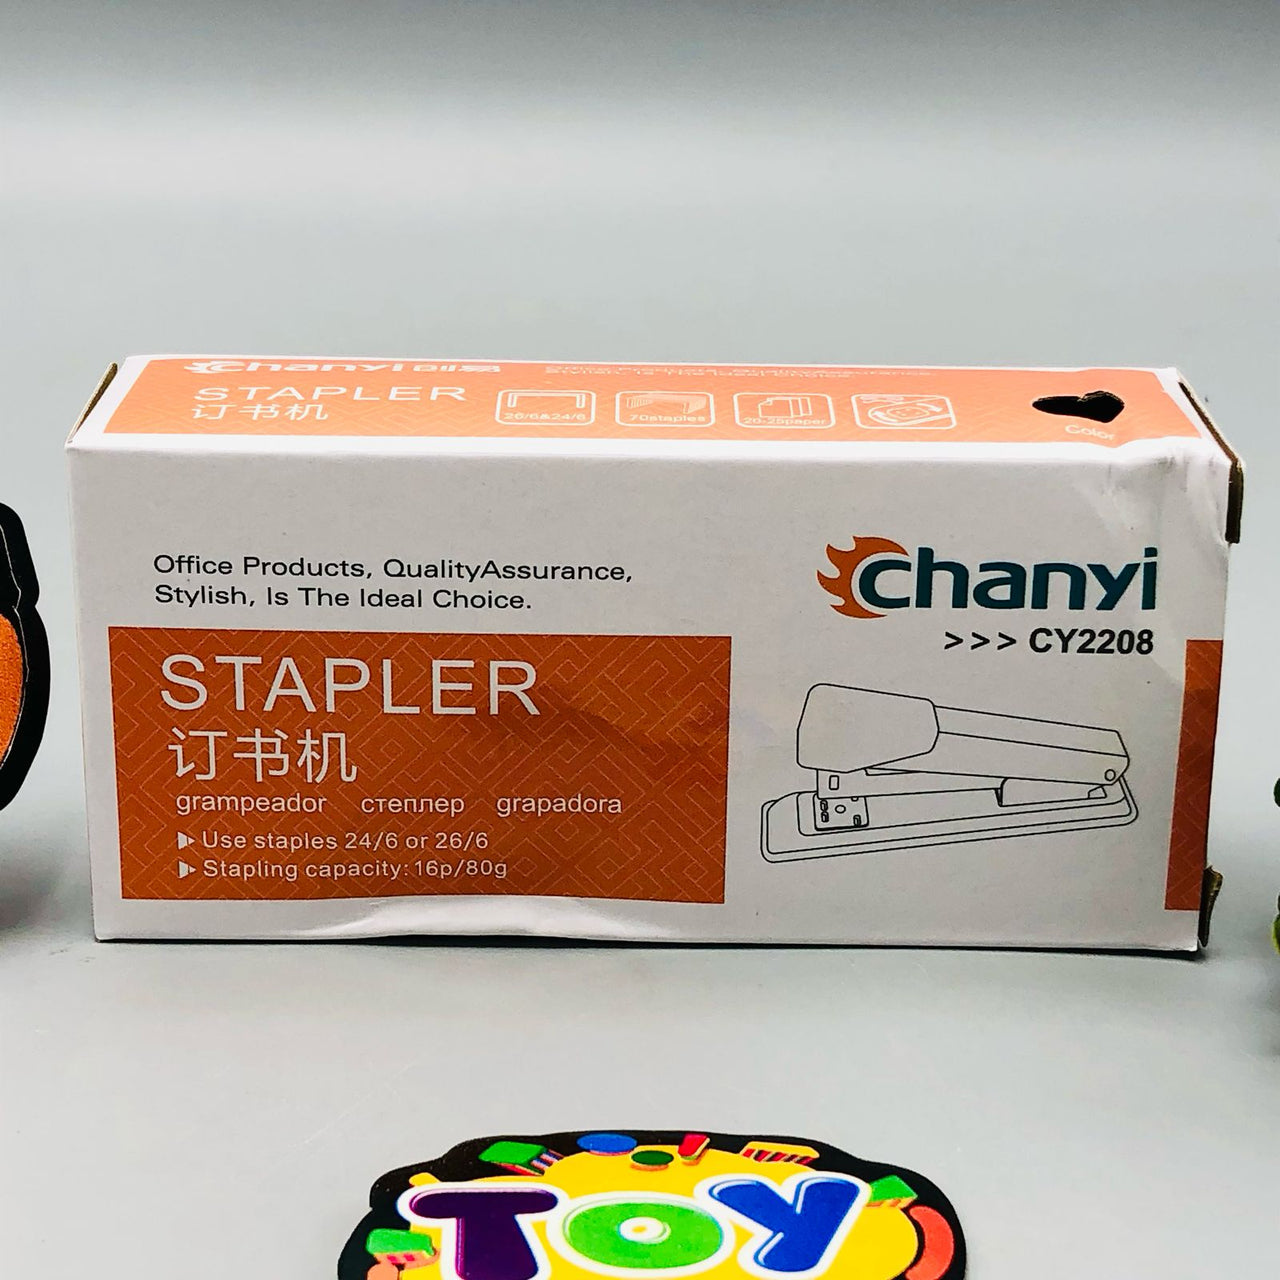 Chanyi Stapler - Efficient Stapling